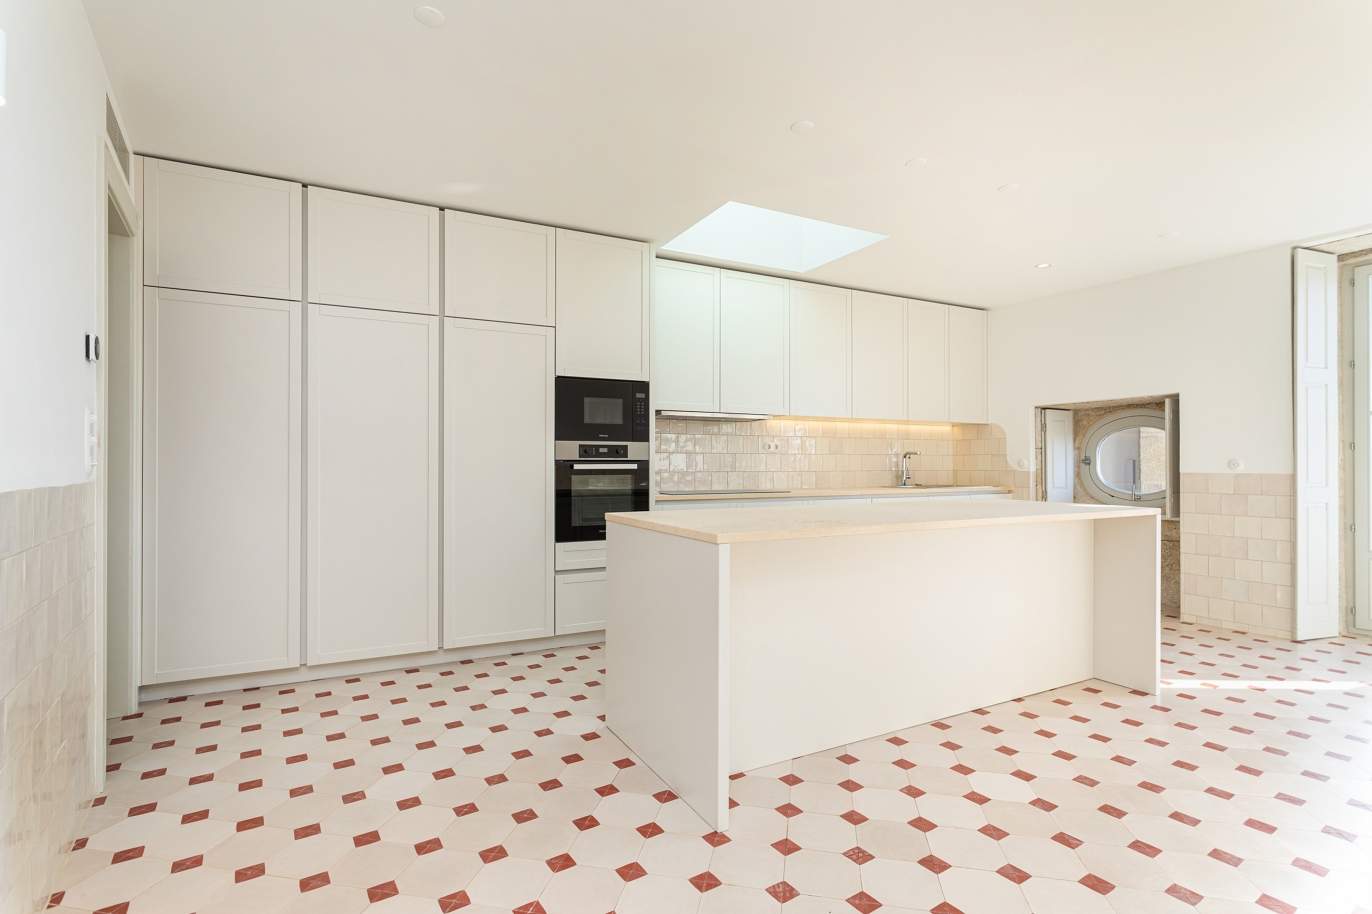 Venda apartamento duplex novo, empreendimento de luxo, Cedofeita, Porto_165737